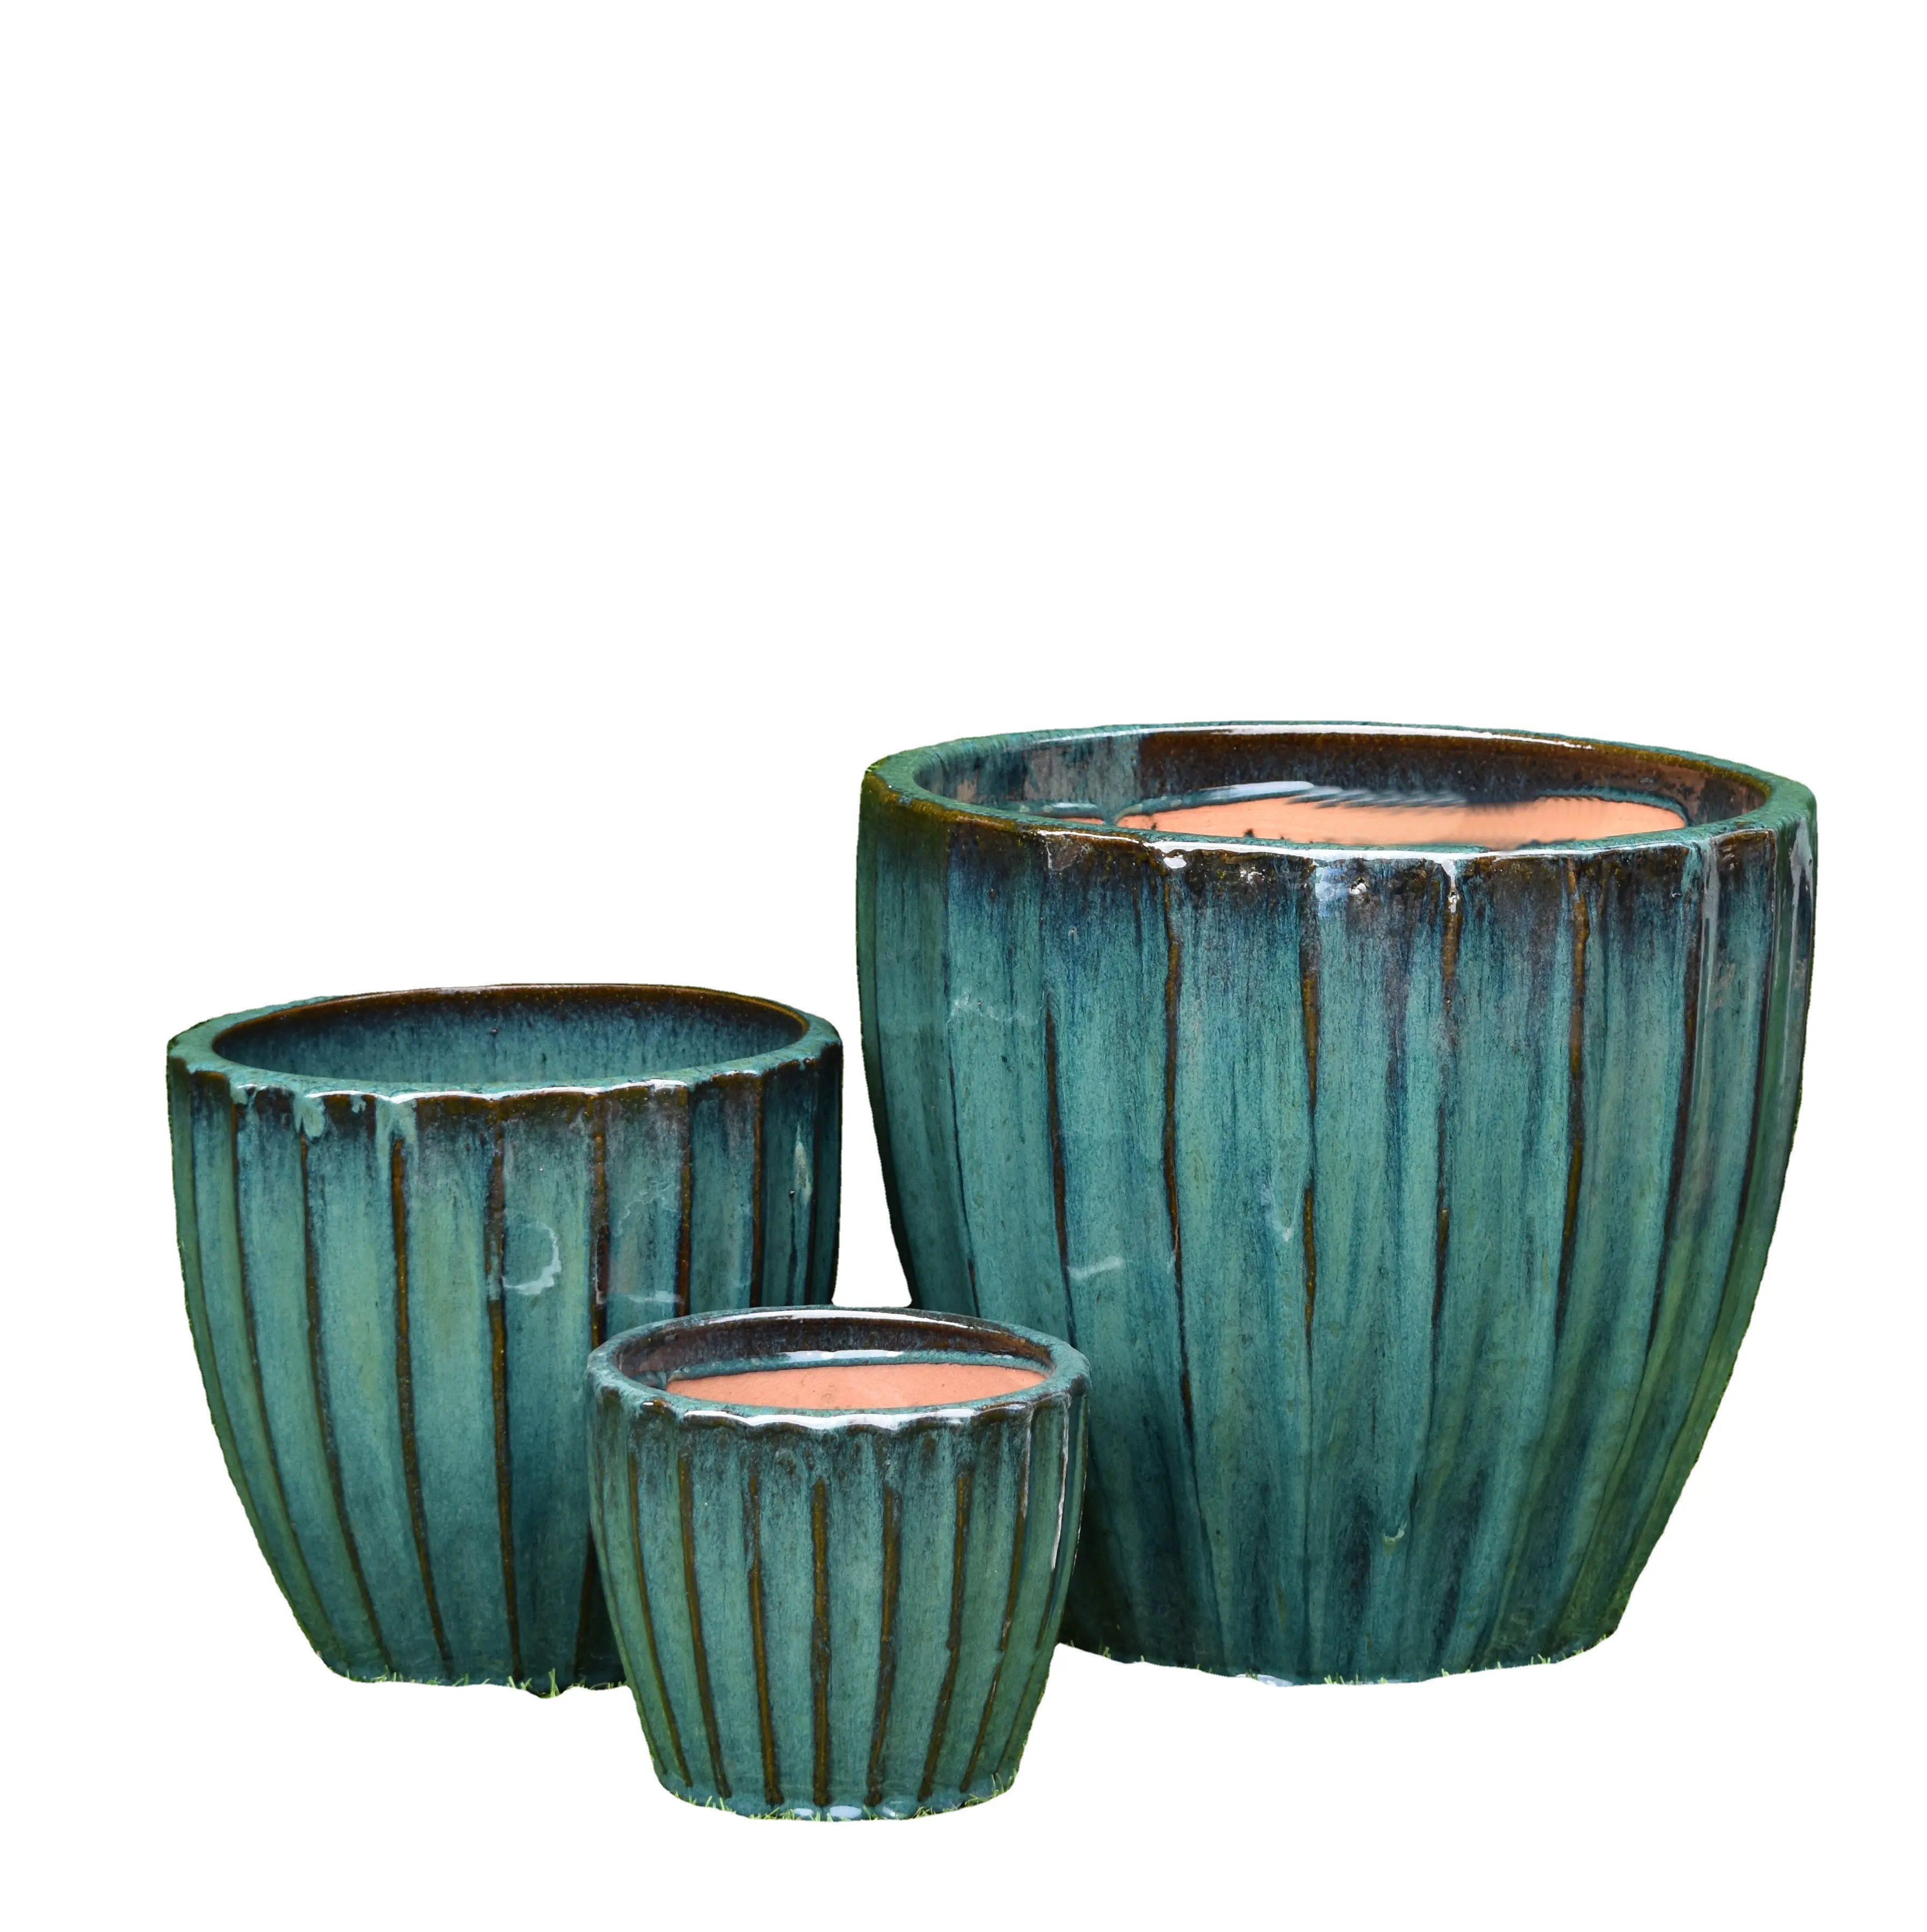 wholesale Outdoor glazed pottery - Outdoor clay planters - Ceramic flower pots - Garden plant planter: